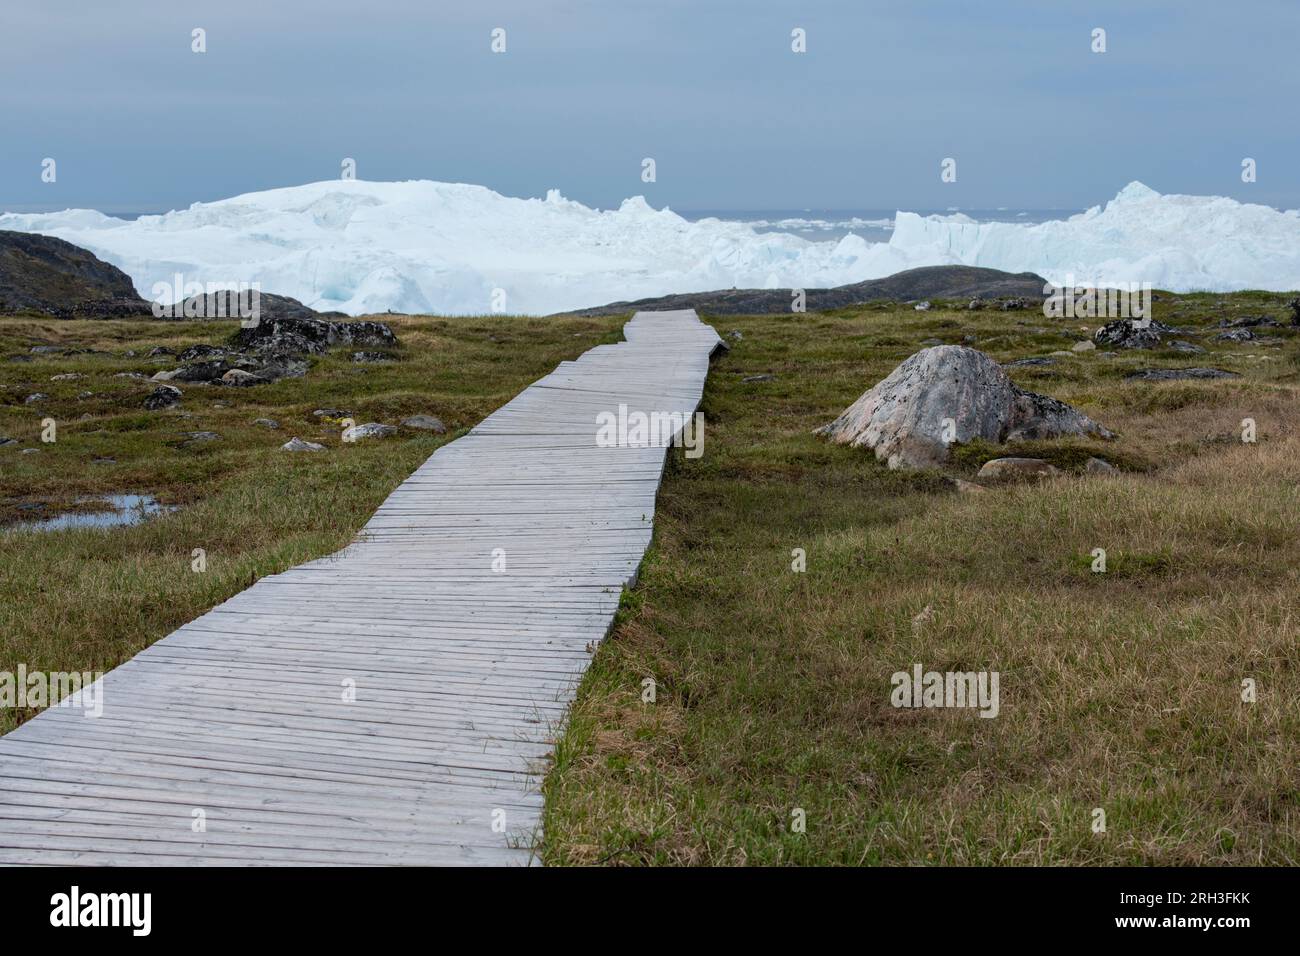 Greenland, Ilulissat, Disko Bay. Wooden walkway leading to Ilulissat Ice Fjord, Sermermiut Trail. UNESCO World Heritage Site. Stock Photo